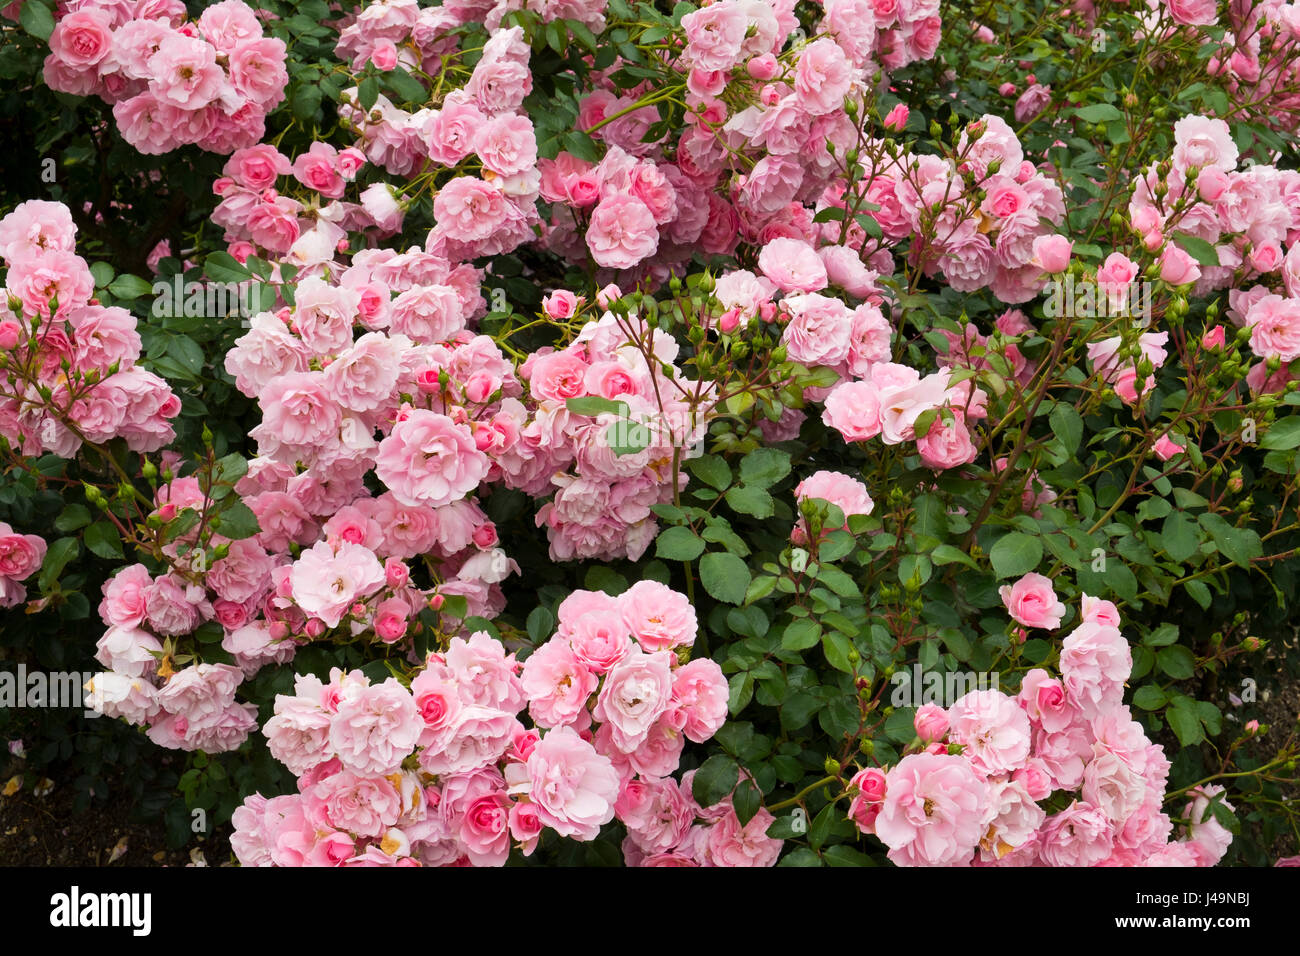 Profuse pink bush roses flowering Stock Photo